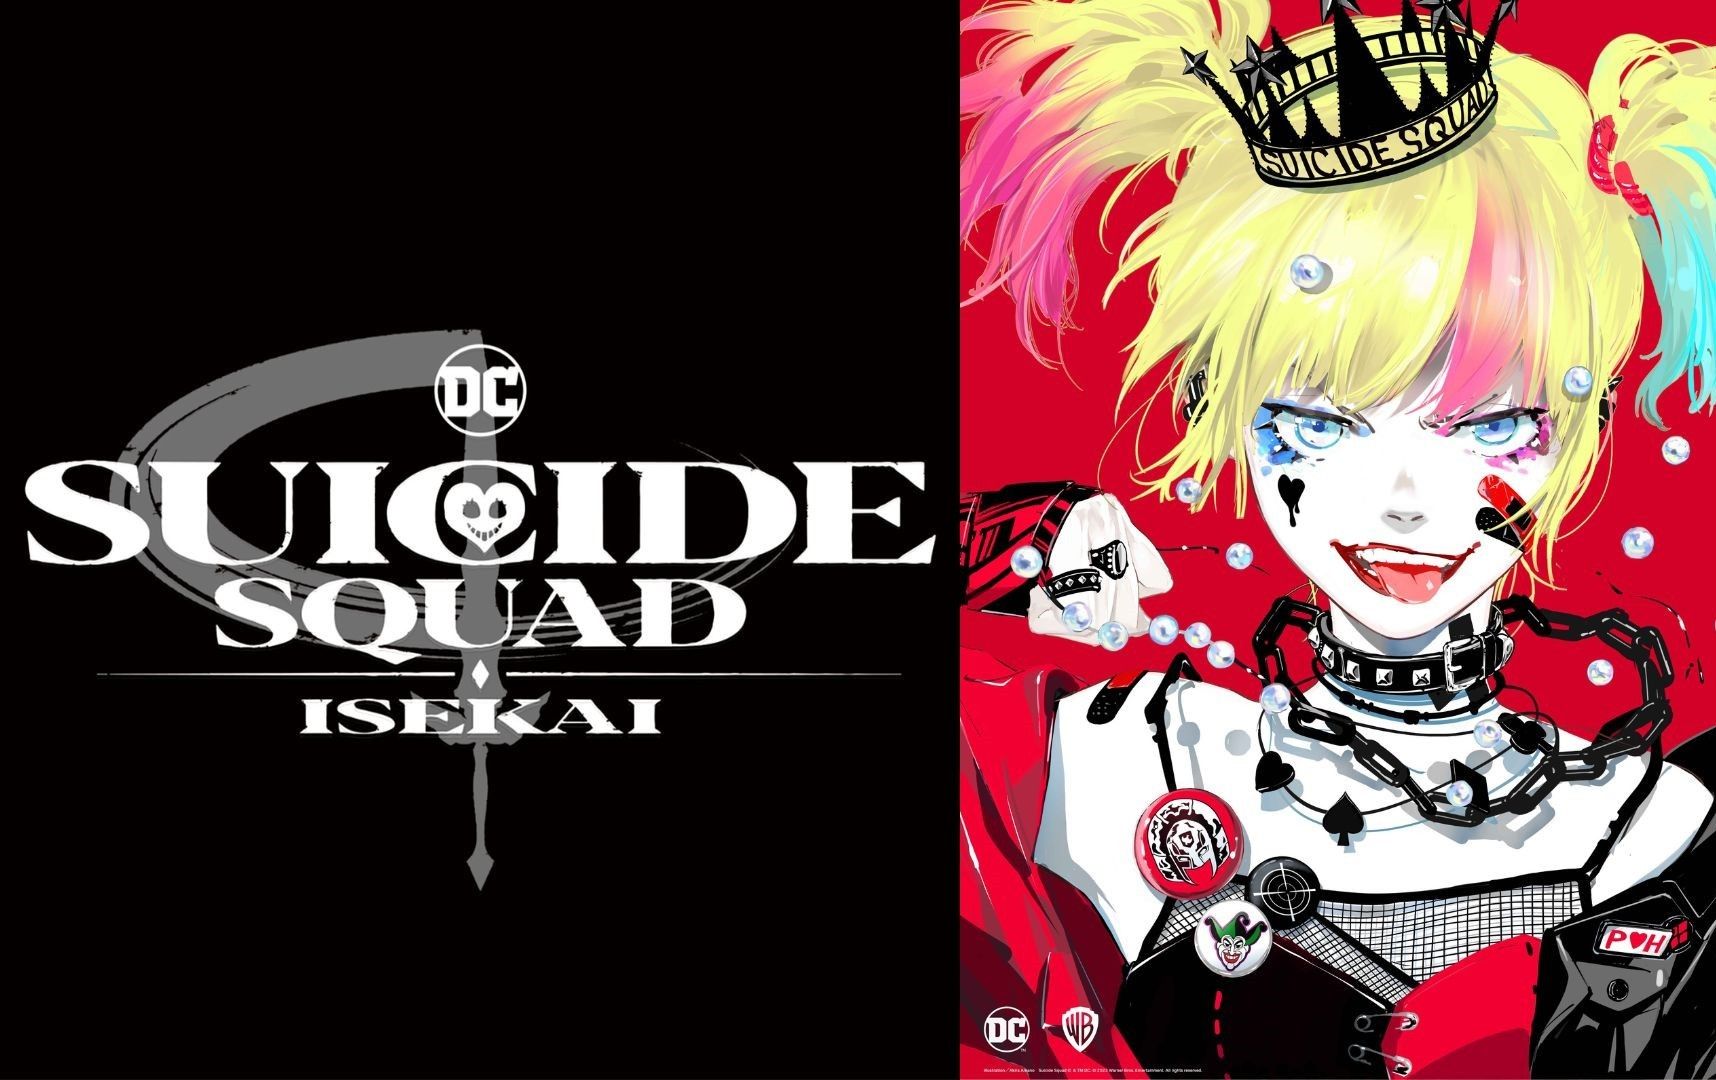 Suicide Squad Isekai Anime Reveals New Cast Members